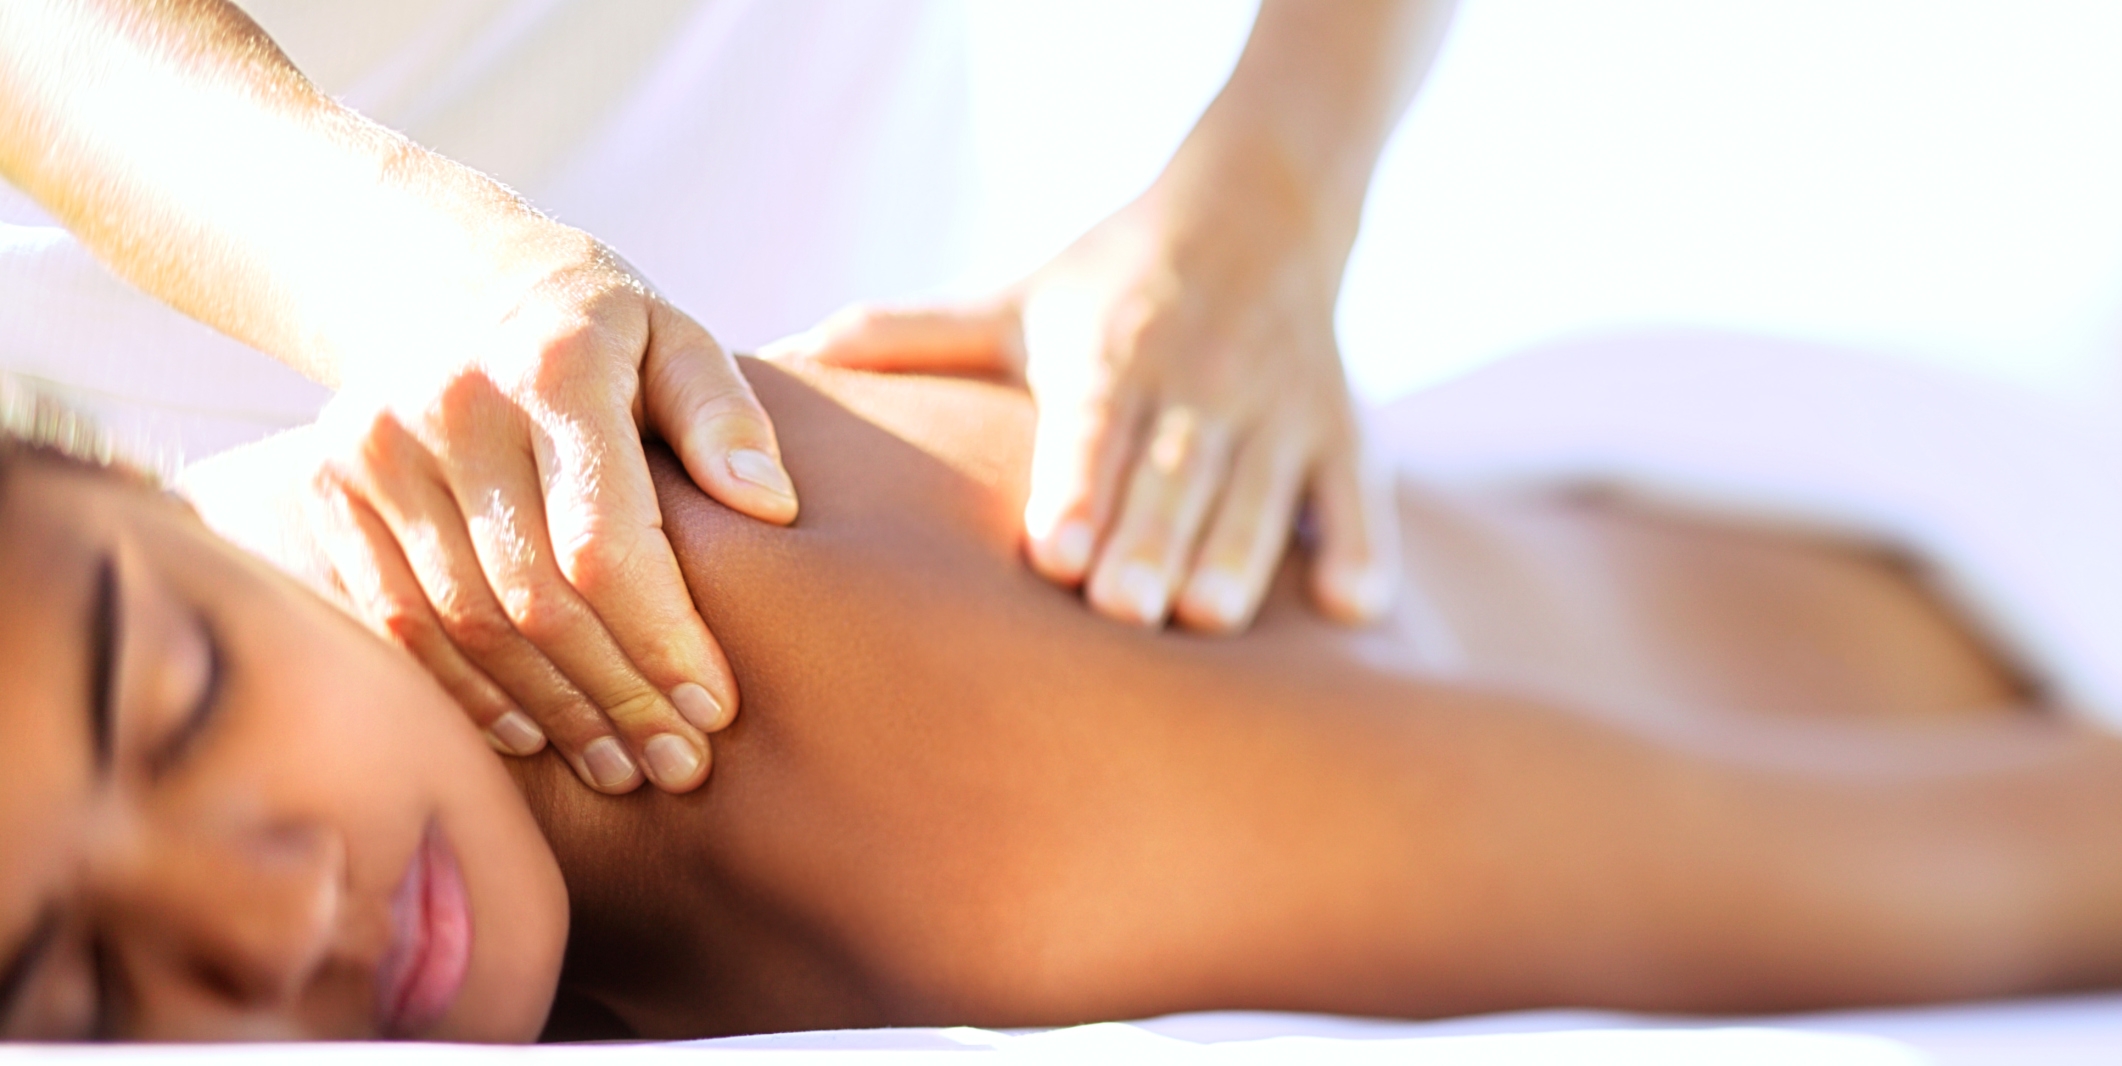 Massage therapist doing body work / image source: babymoonlex.com